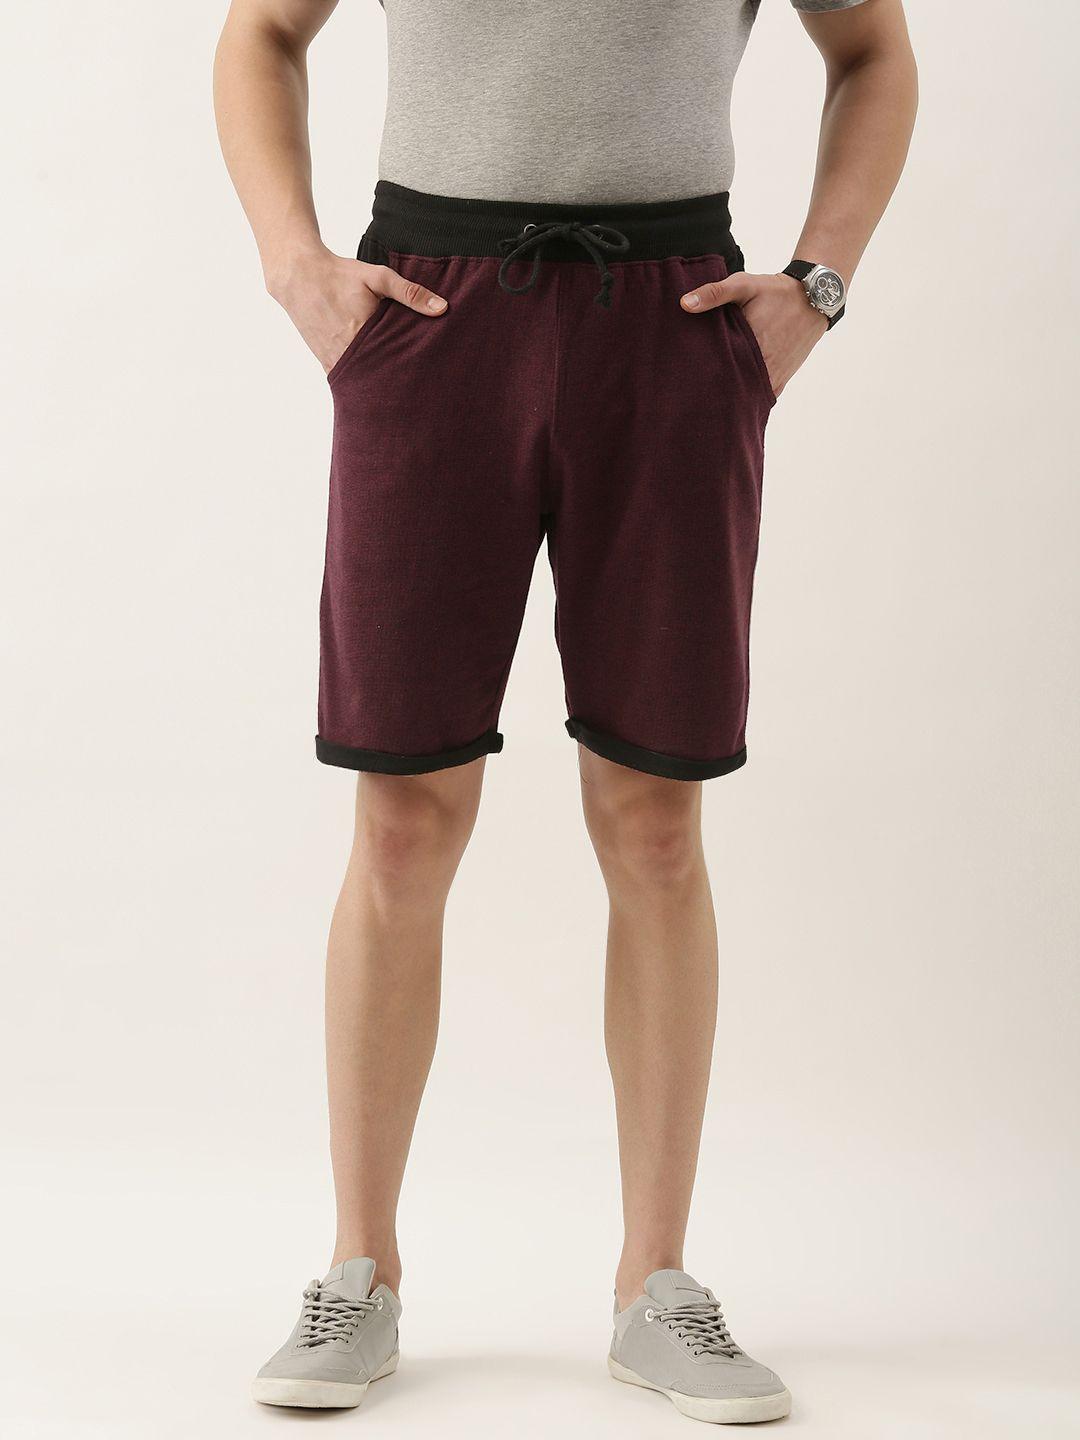 arise men burgundy solid shorts